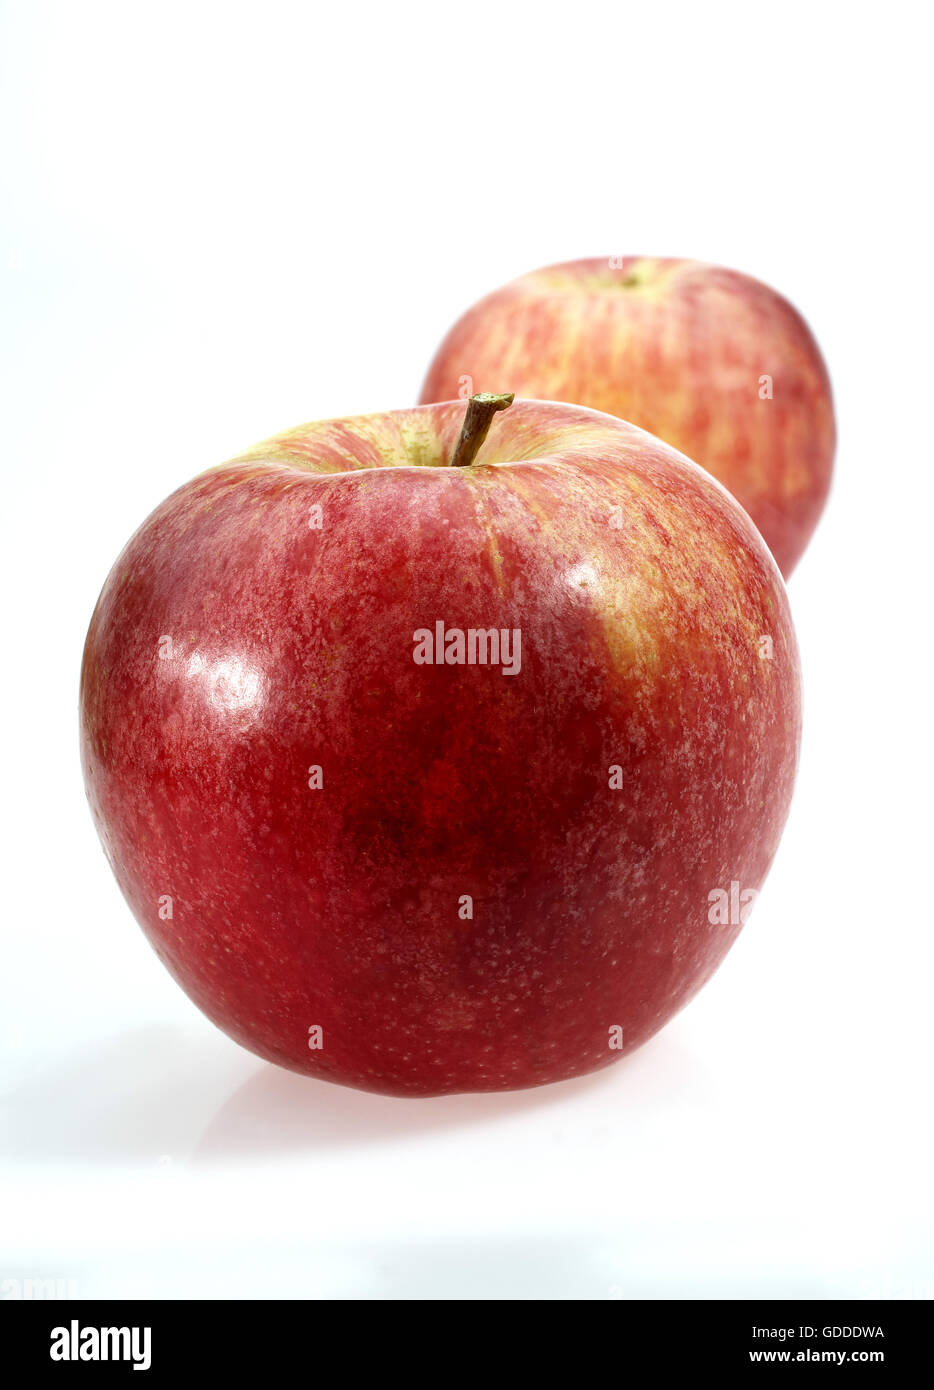 https://c8.alamy.com/comp/GDDDWA/royal-gala-apple-malus-domestica-fruits-against-white-background-GDDDWA.jpg